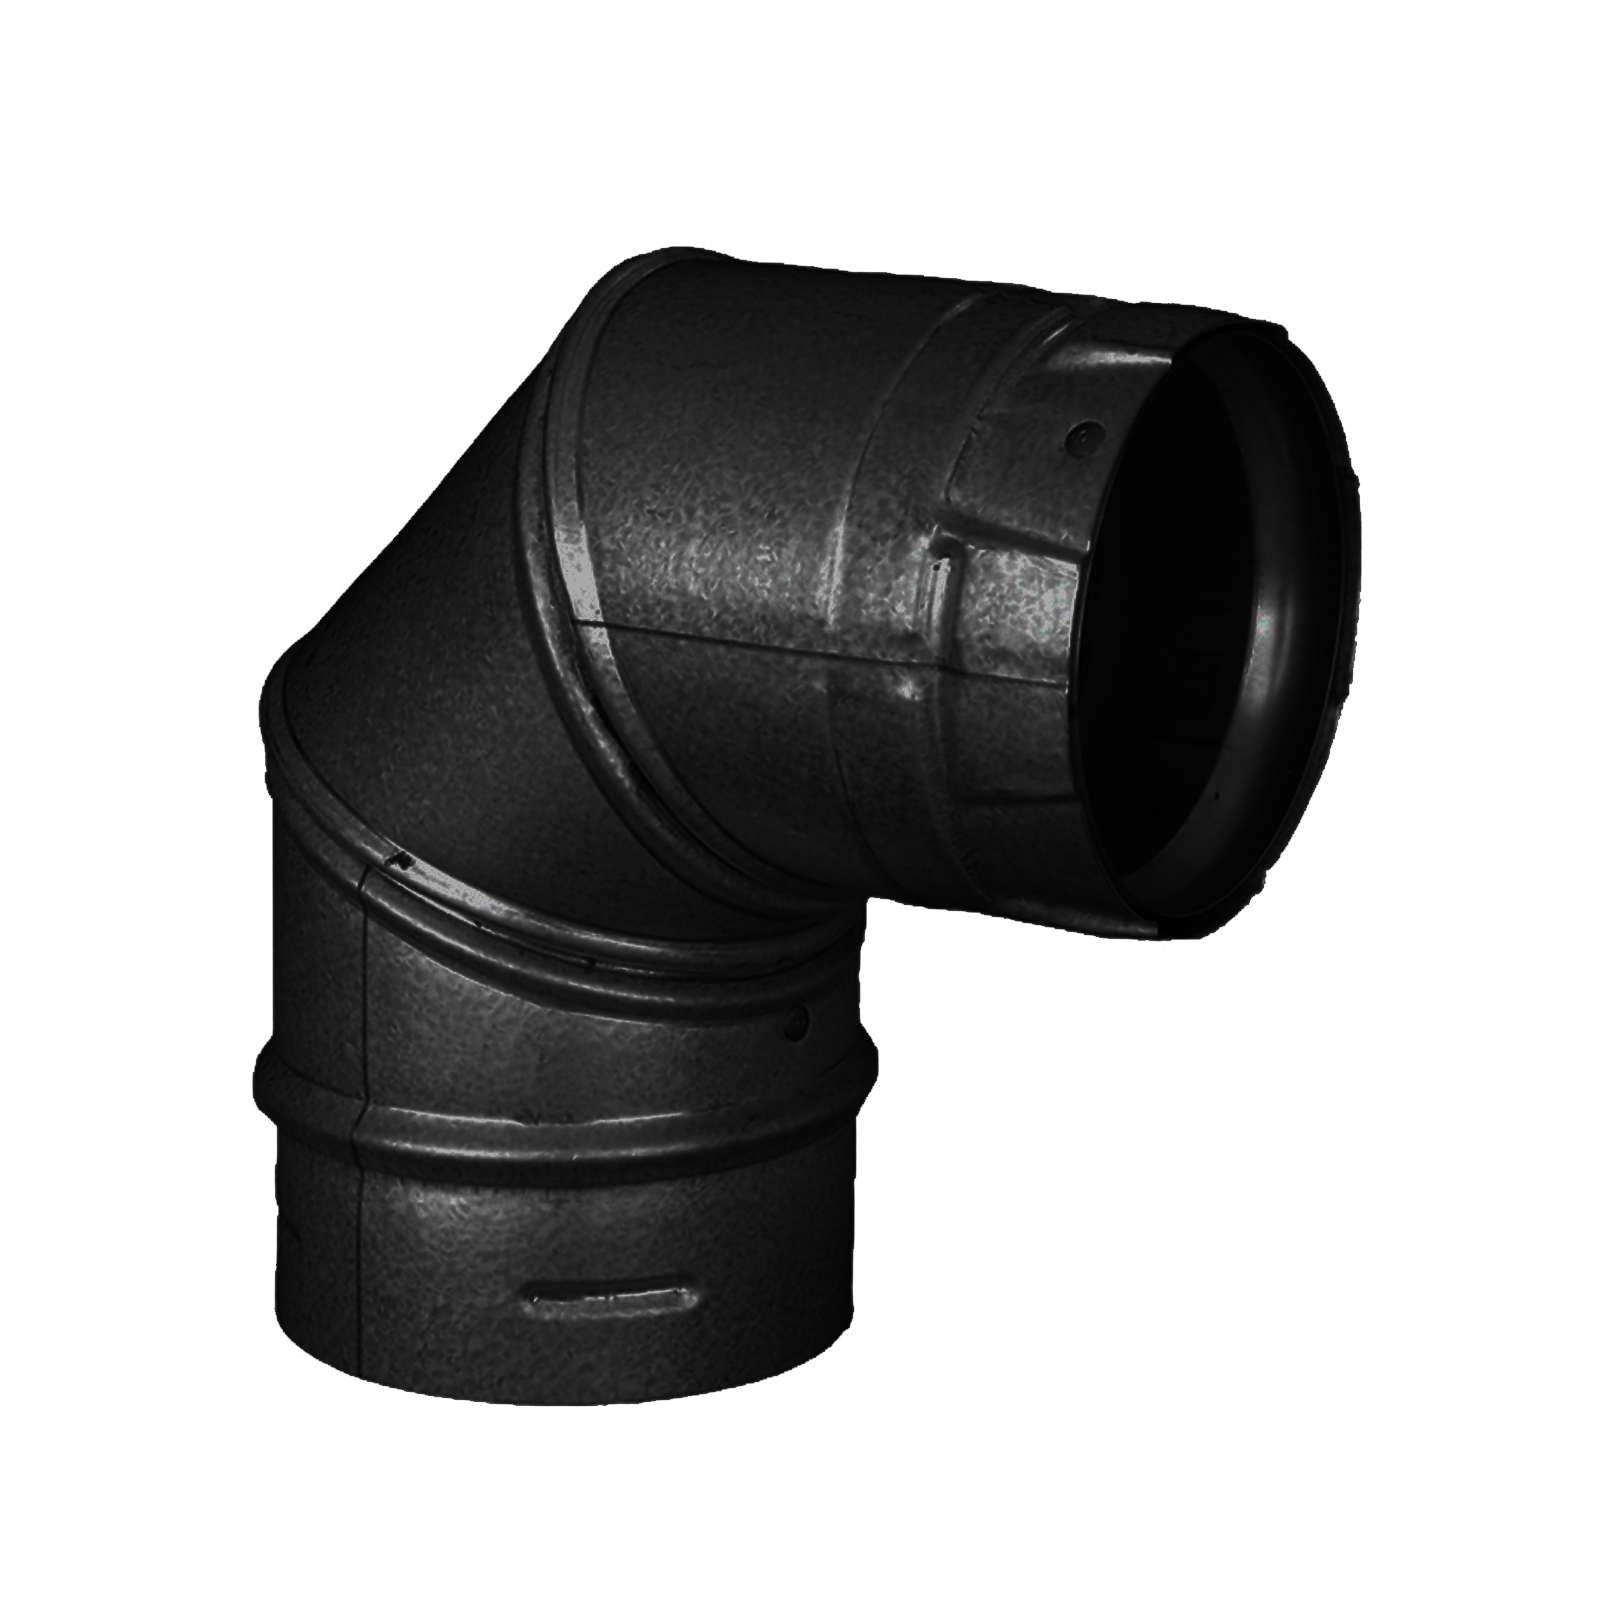 DuraVent Pellet Vent Pro 90 Degree Elbow (black) | 4PVP-E90B